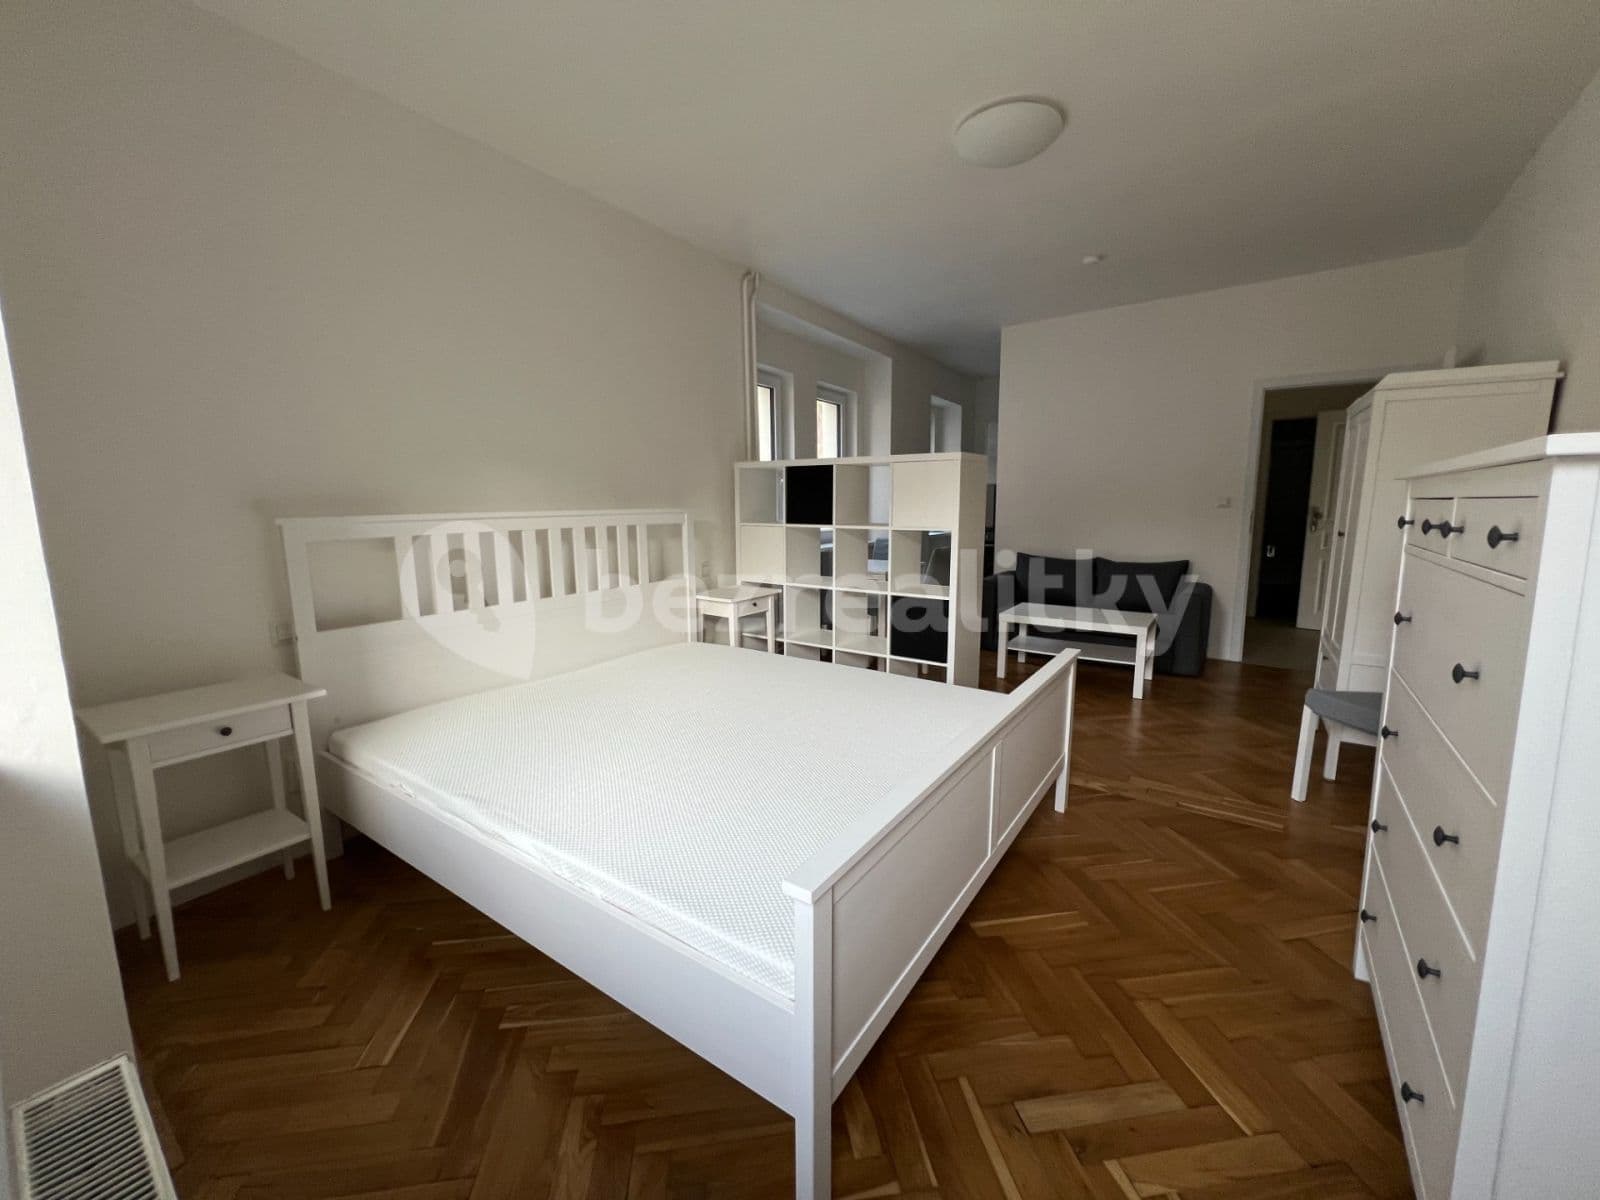 1 bedroom flat for sale, 35 m², Palackého, Jáchymov, Karlovarský Region